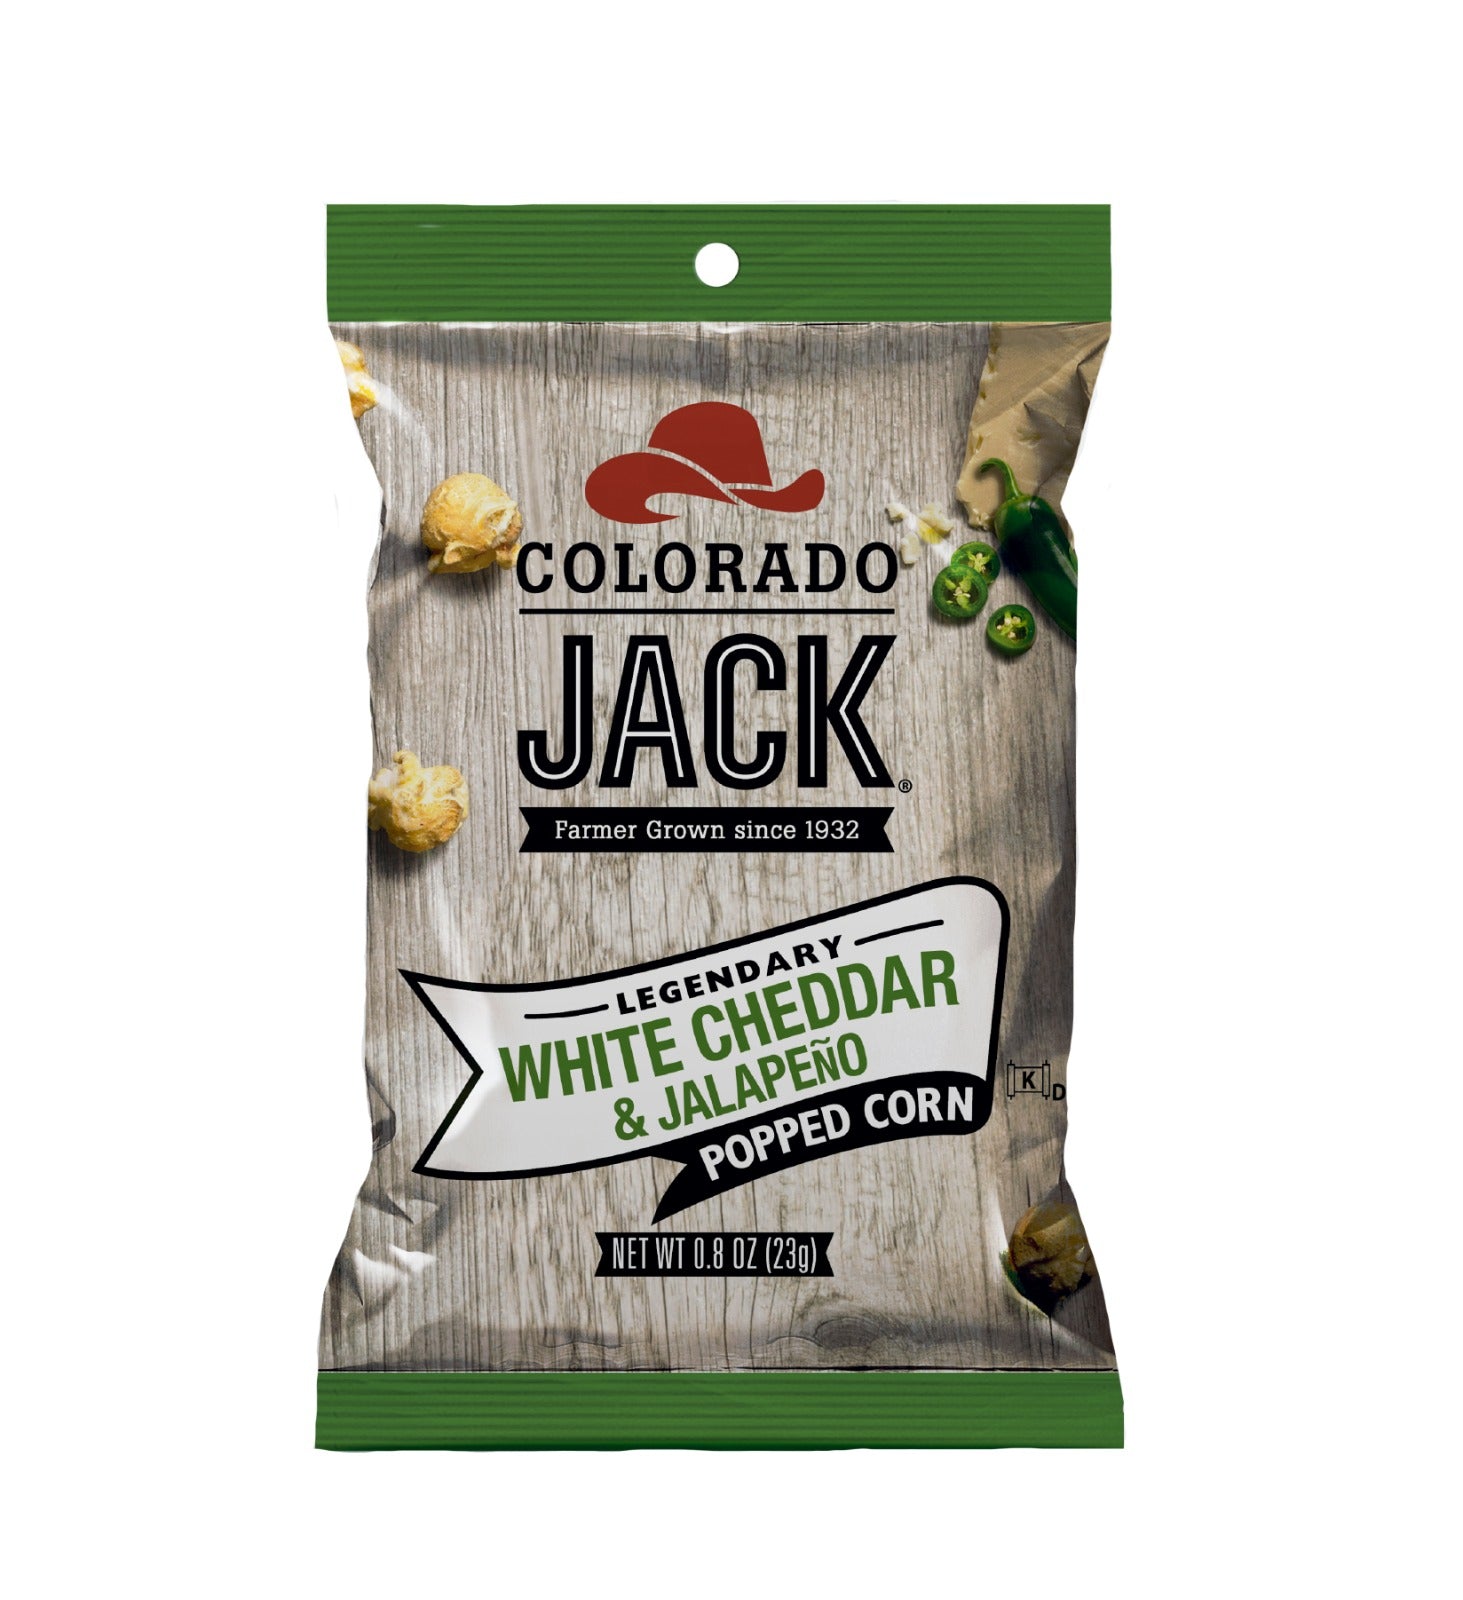 Colorado Jack White Cheddar & Jalapeno USA Popcorn 2oz - 6 Count *28/07/24 DATED*